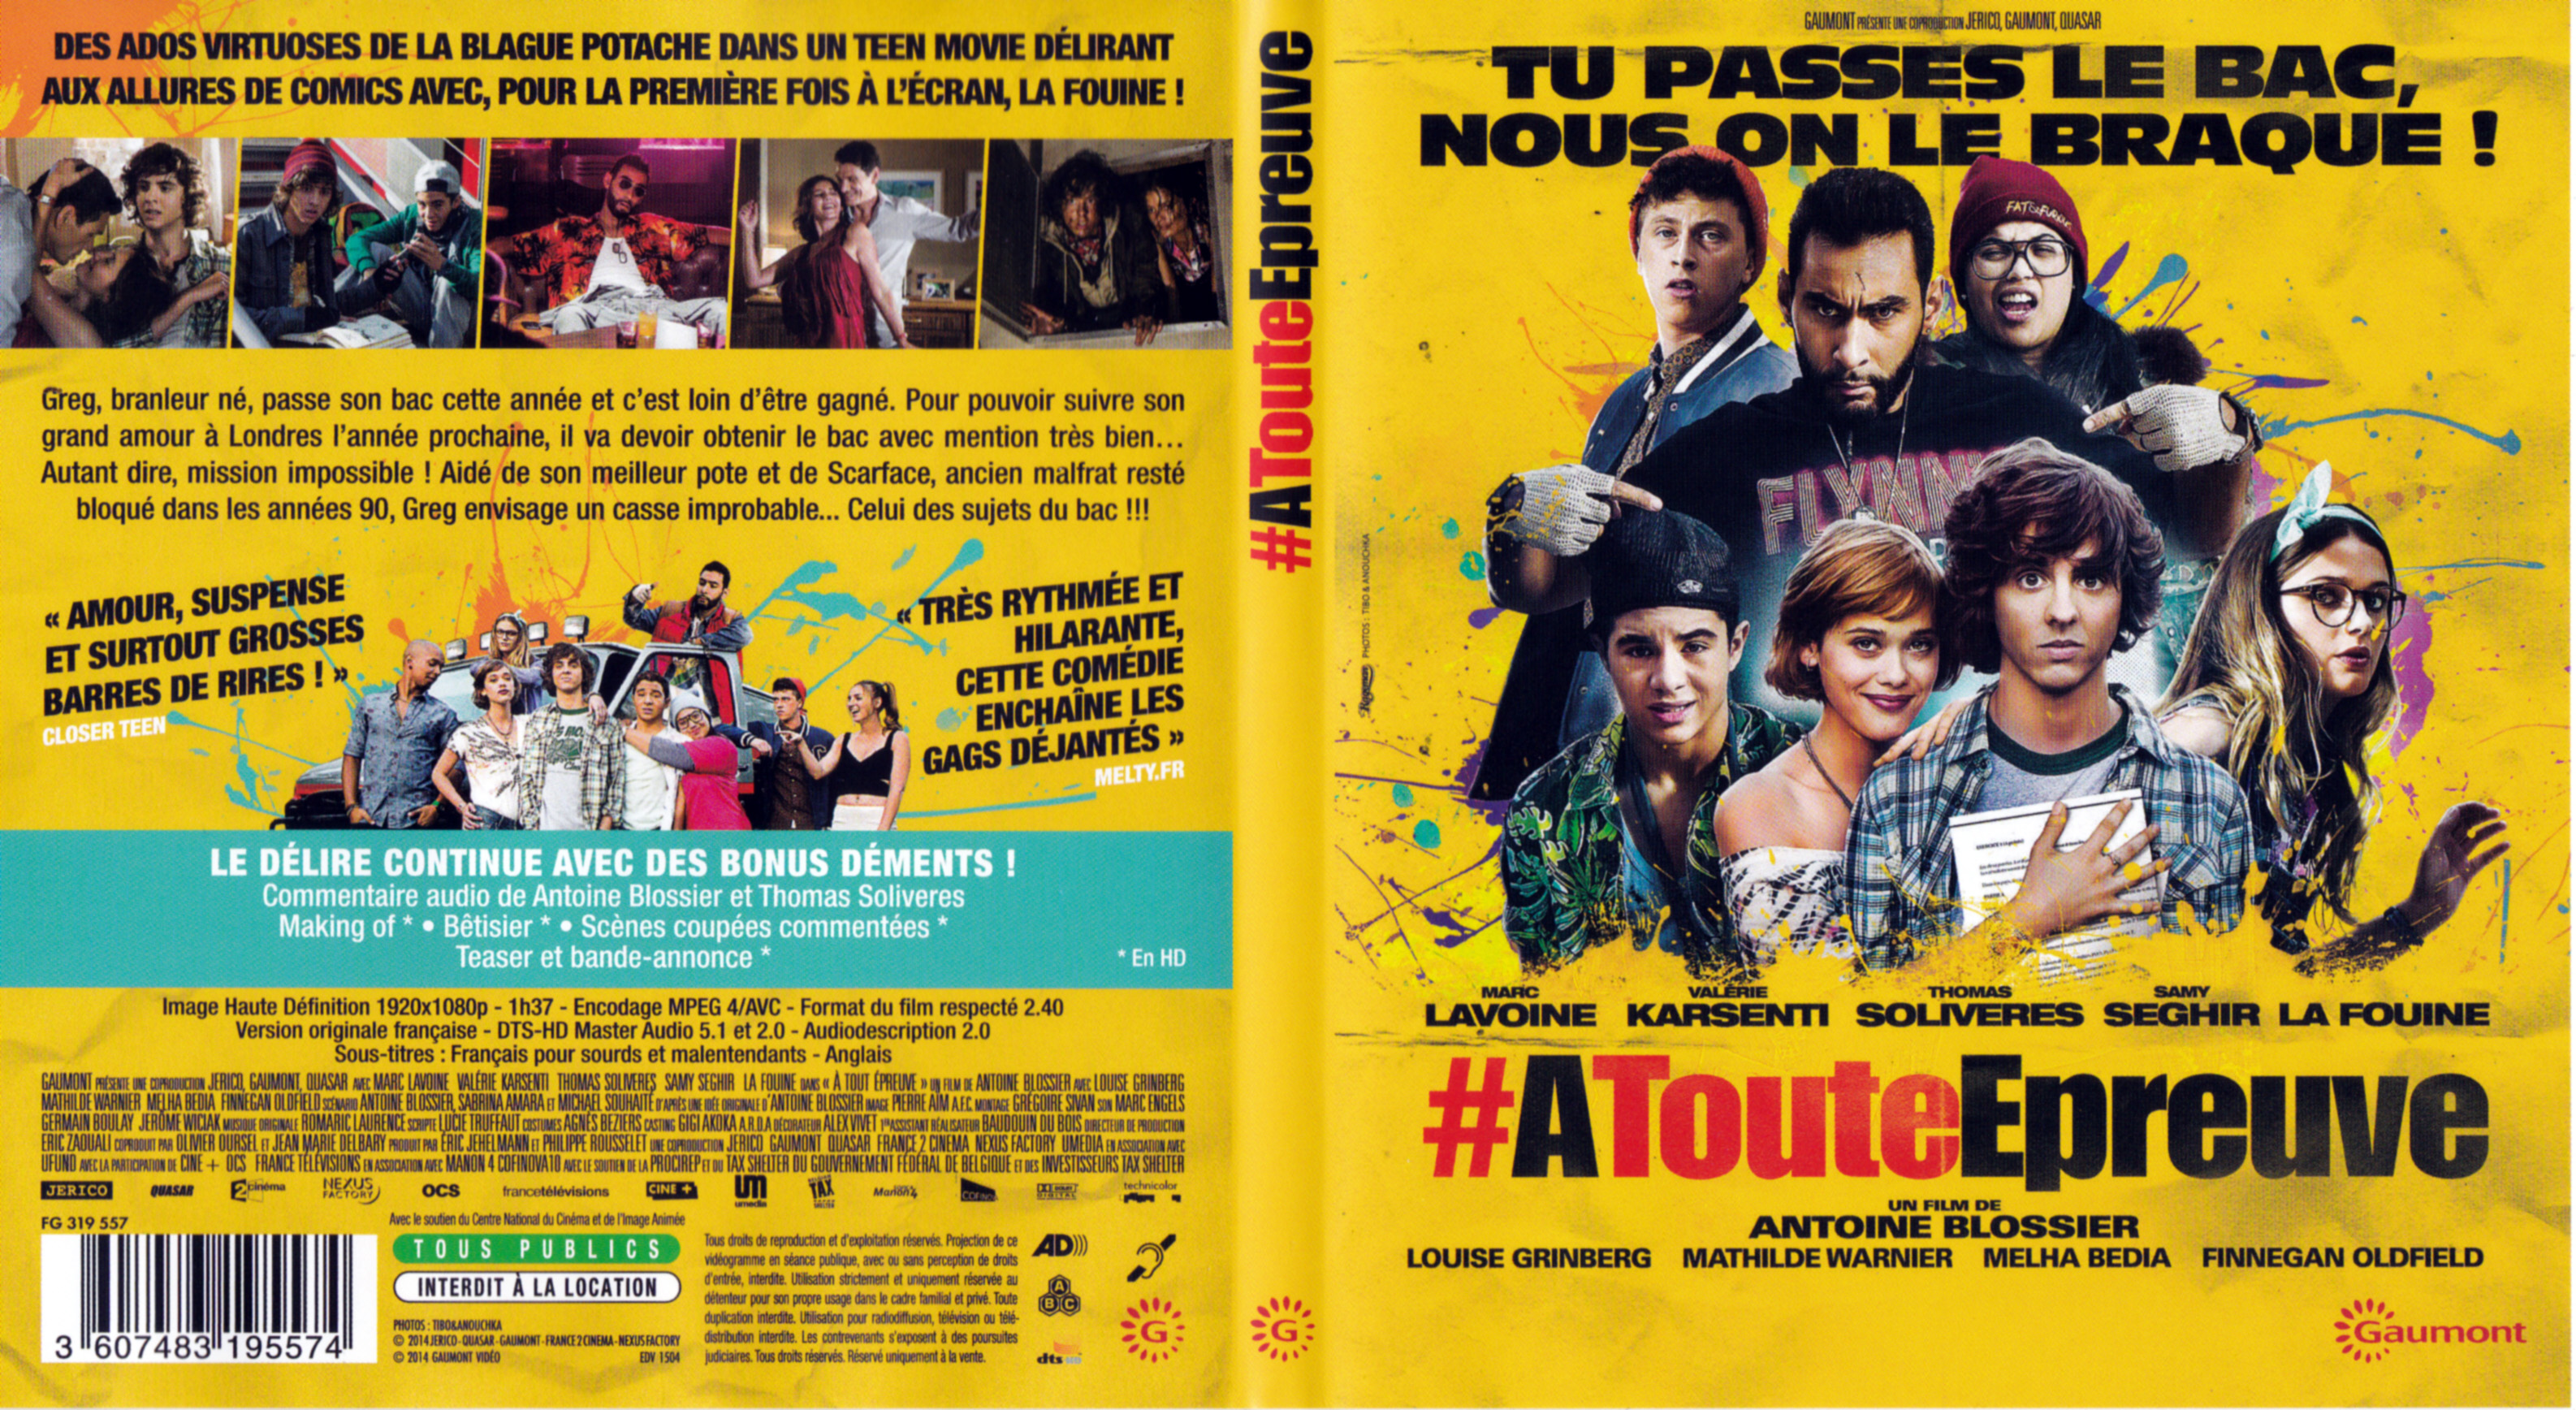 Jaquette DVD A toute epreuve (2014) (BLU-RAY)